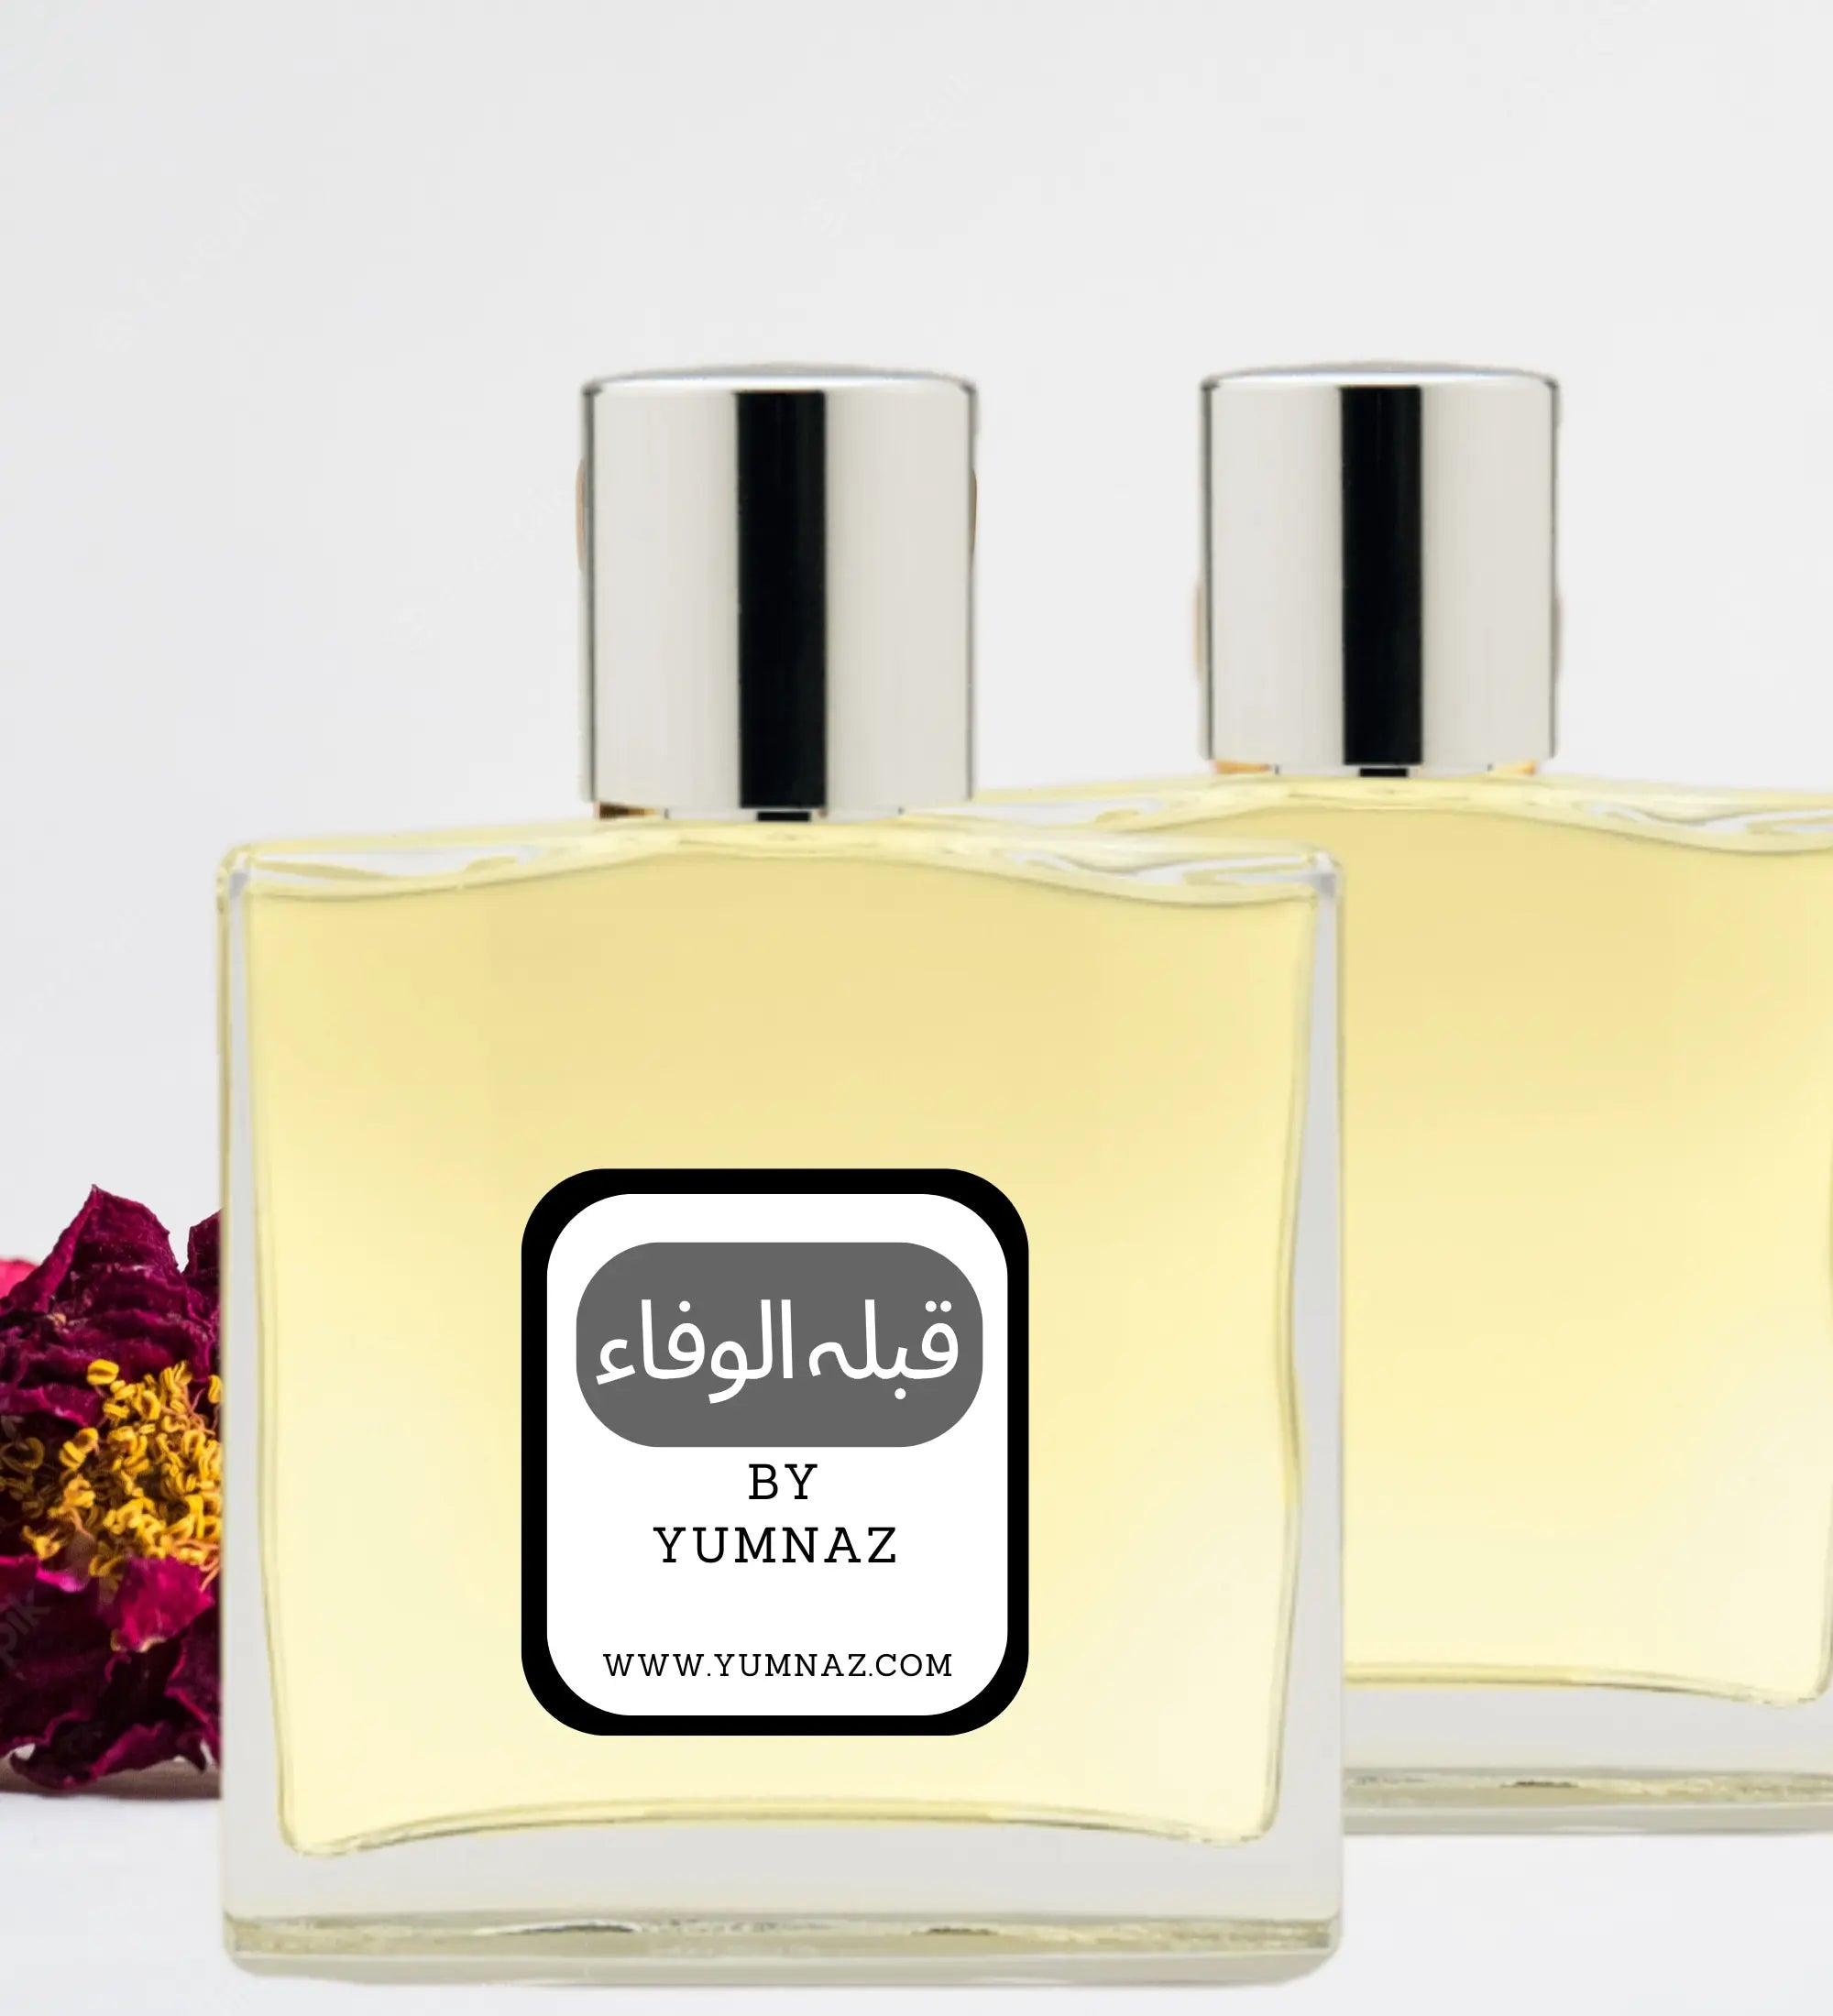 Get the best price of Qiblatul Wafa Perfume in Pakistan - yumnaz